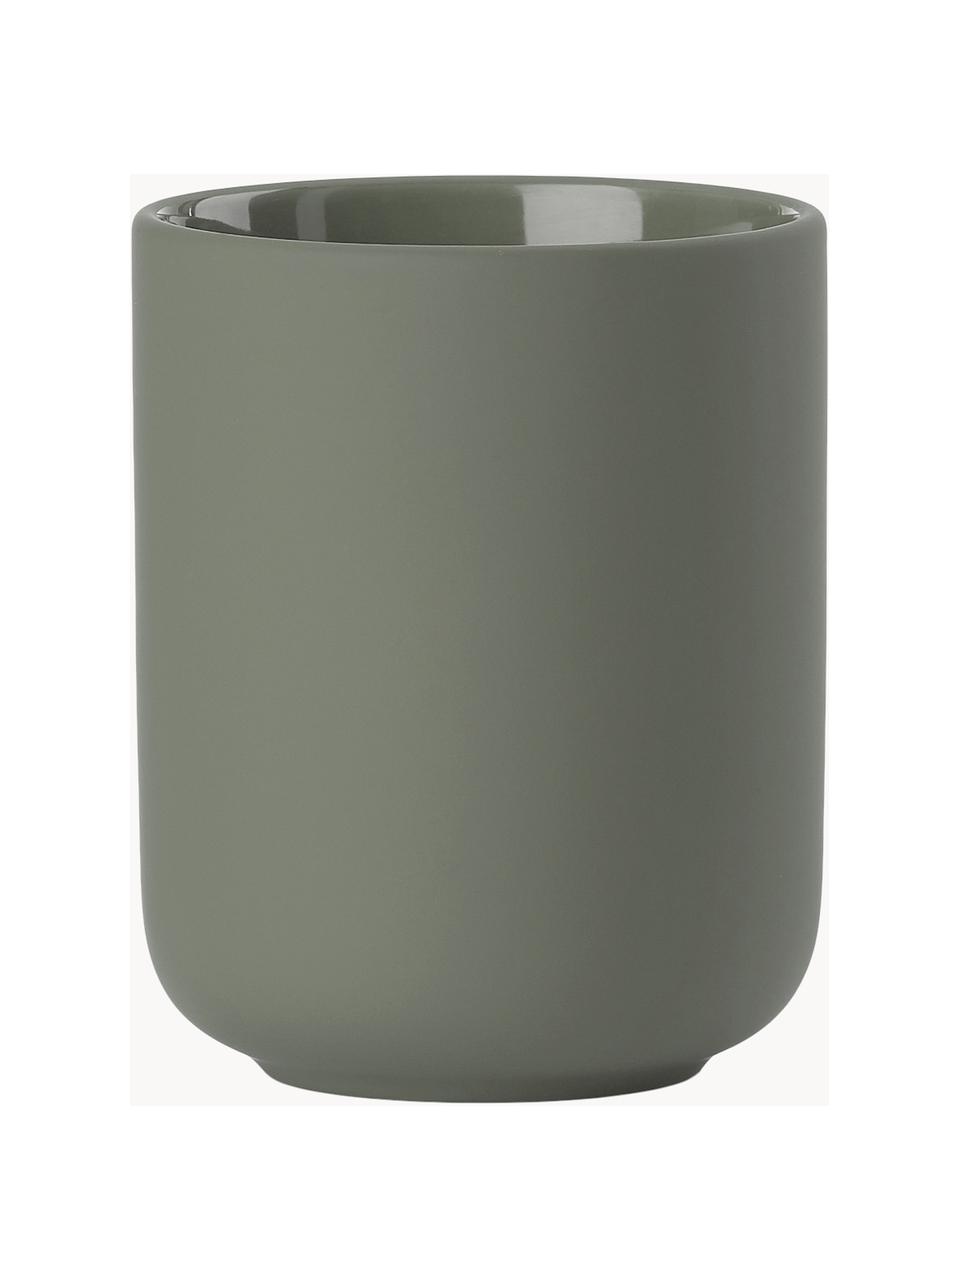 Porta spazzolino con superficie soft-touch Ume, Gres rivestito con superficie soft-touch (plastica), Verde oliva, Ø 8 x Alt. 10 cm